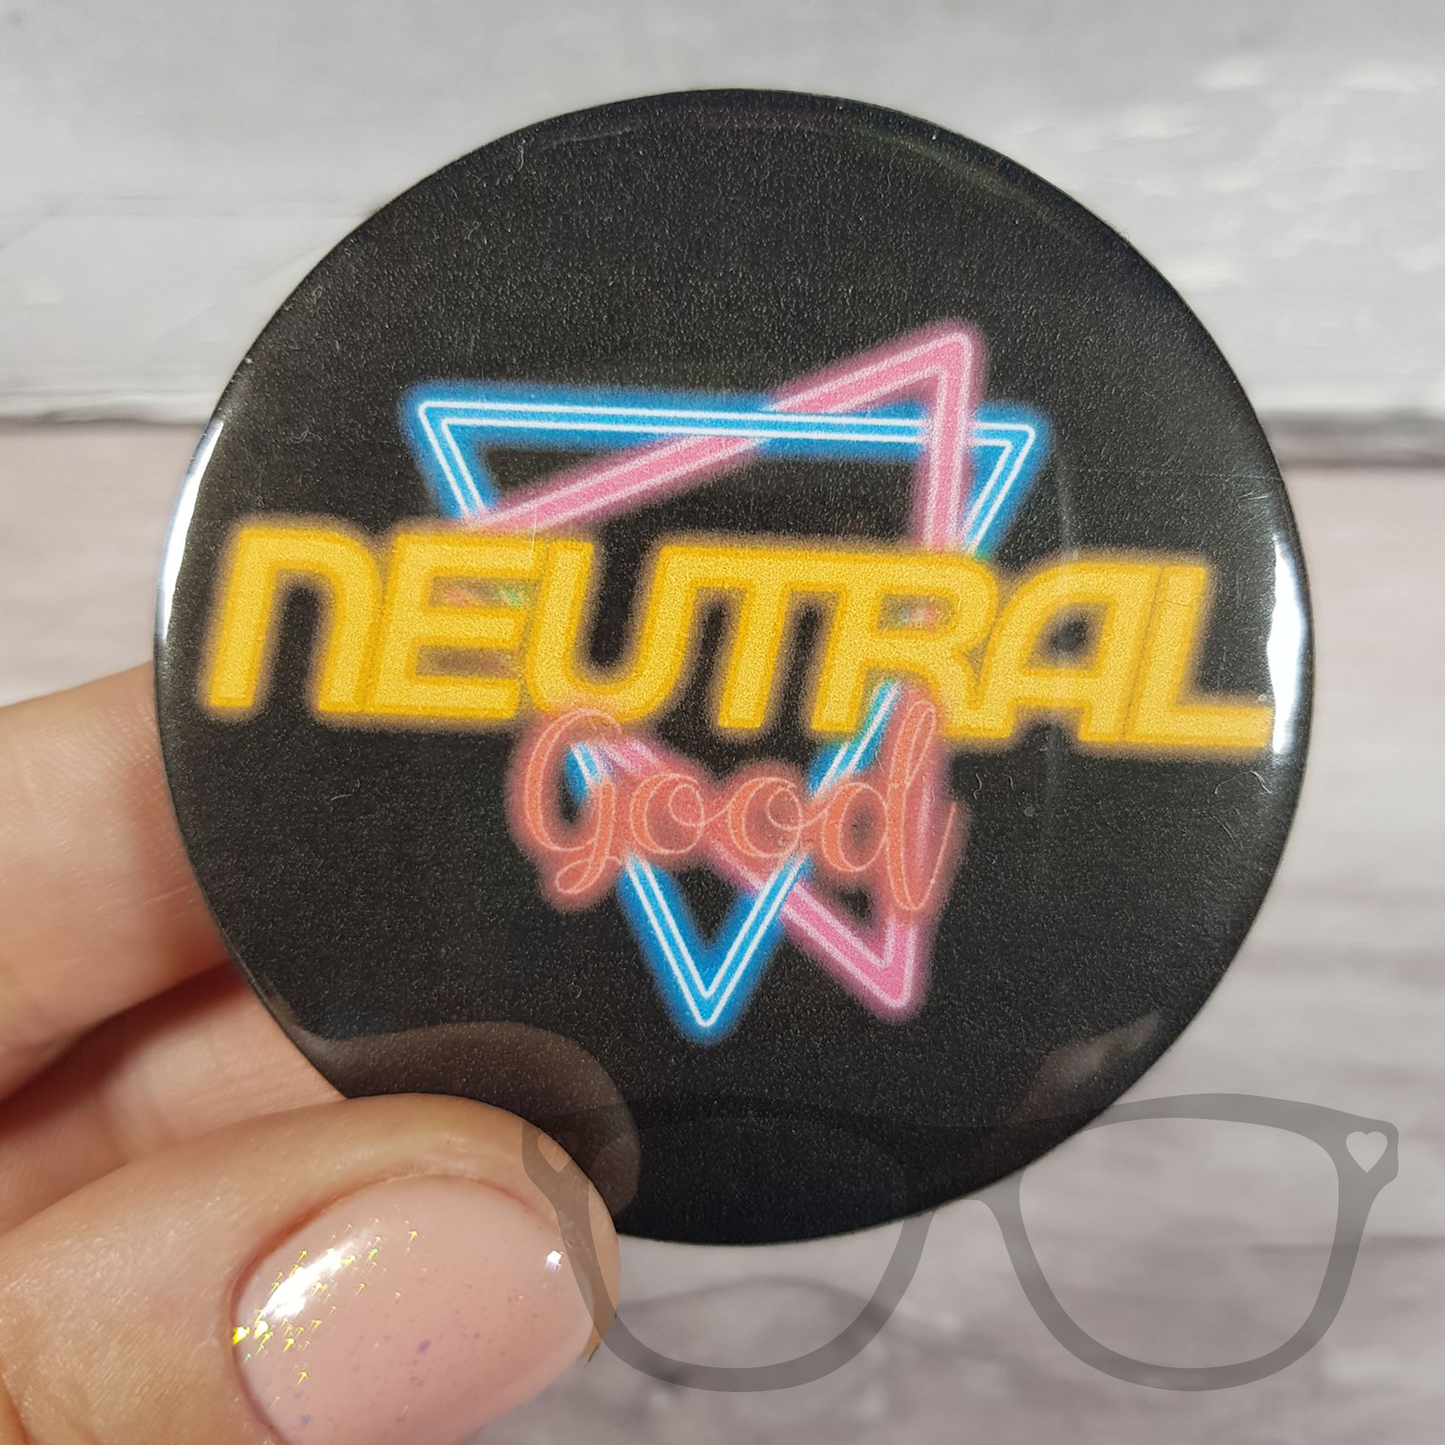 Neutral good cyberpunk style alignment badge